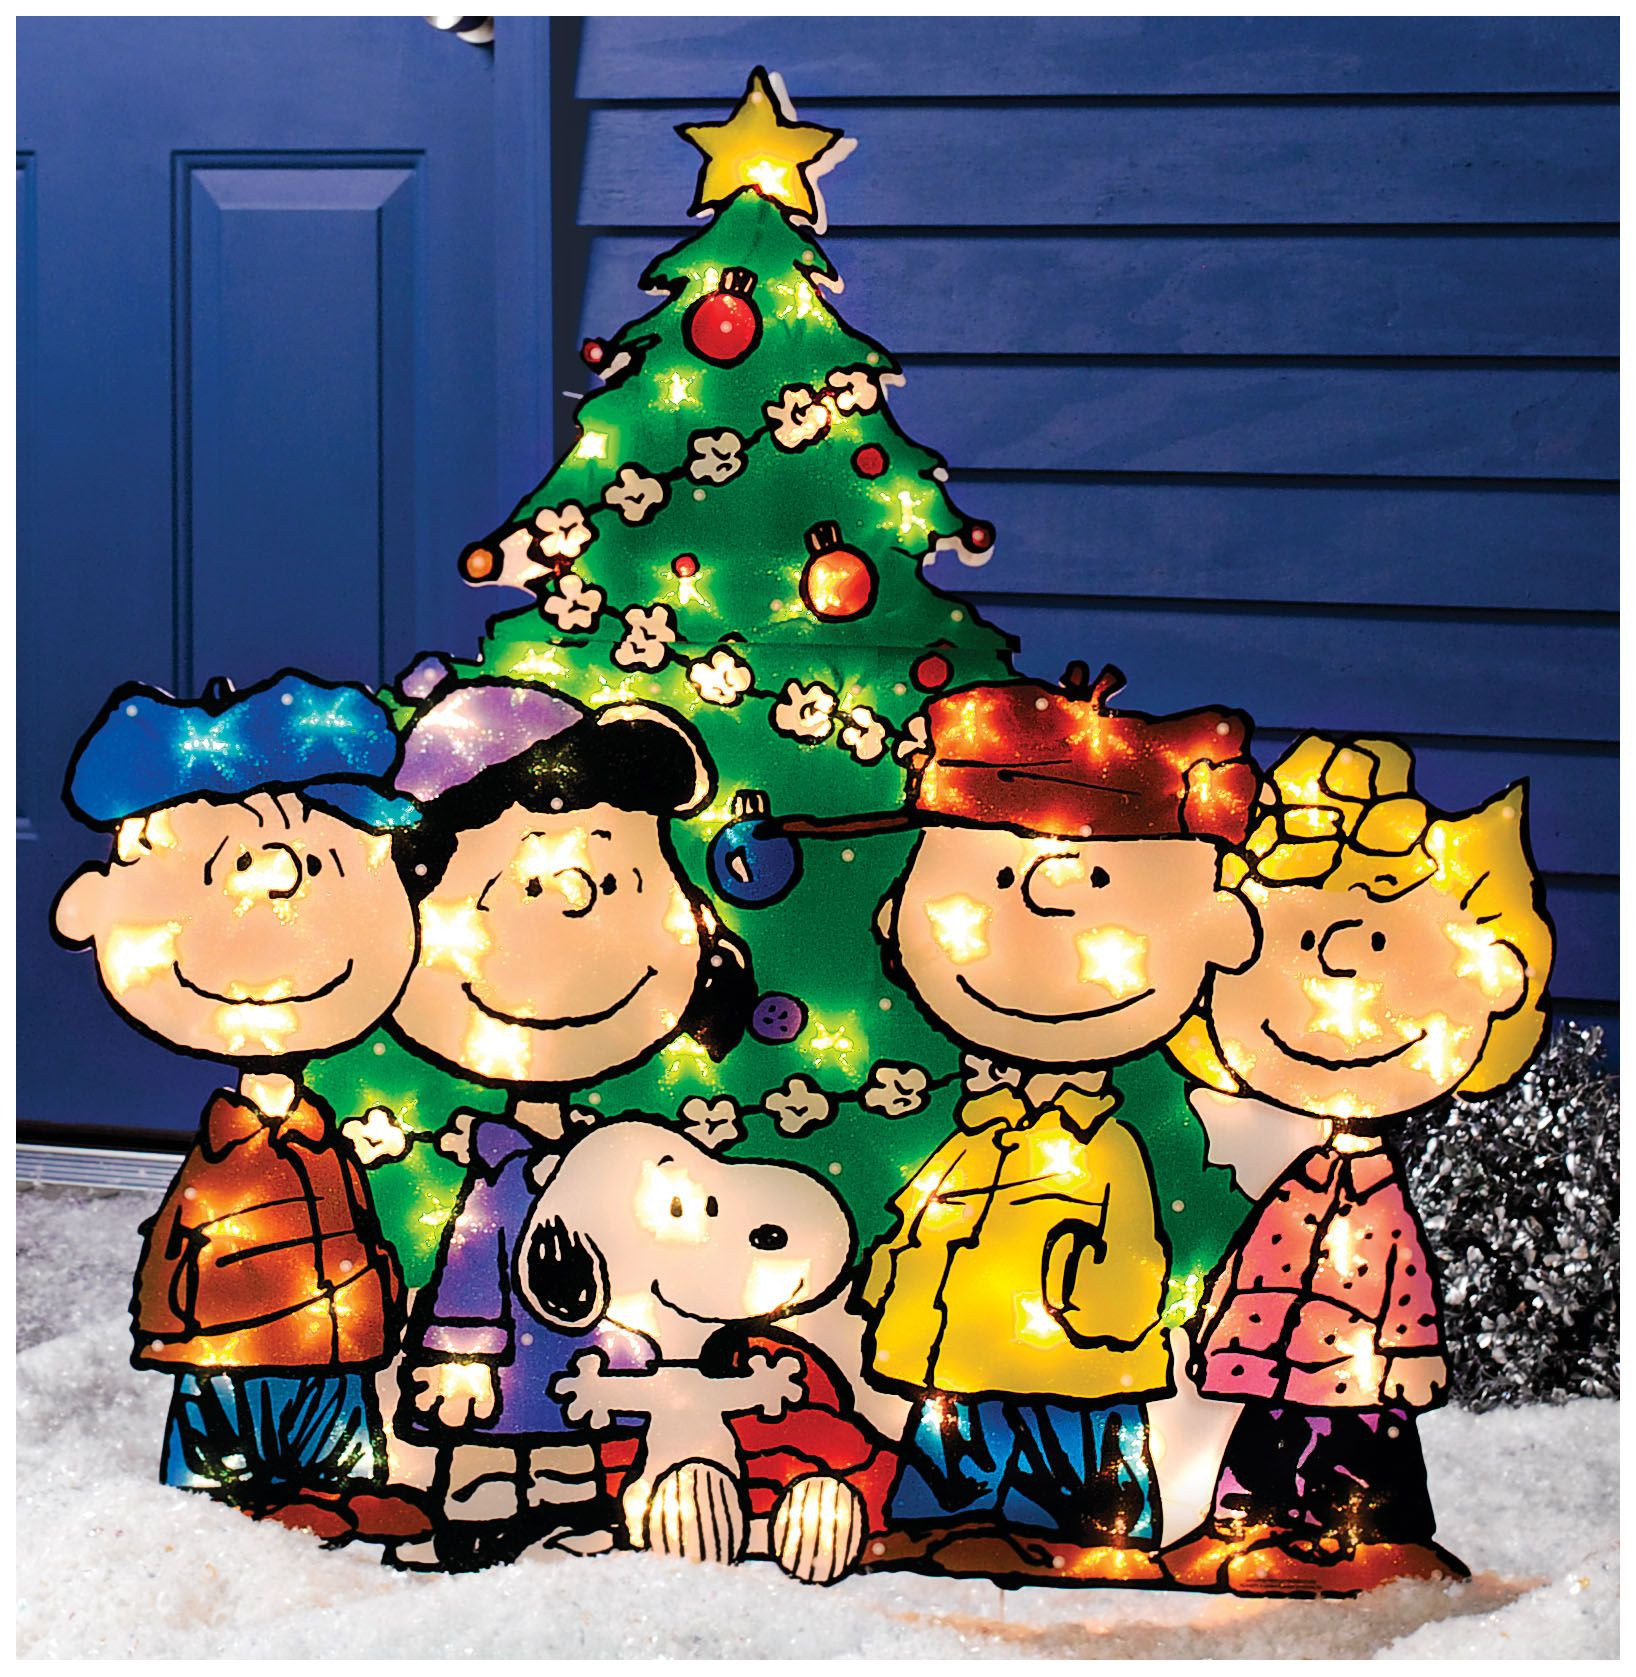 Peanut Outdoor Christmas Decorations
 peanuts characters christmas decorations